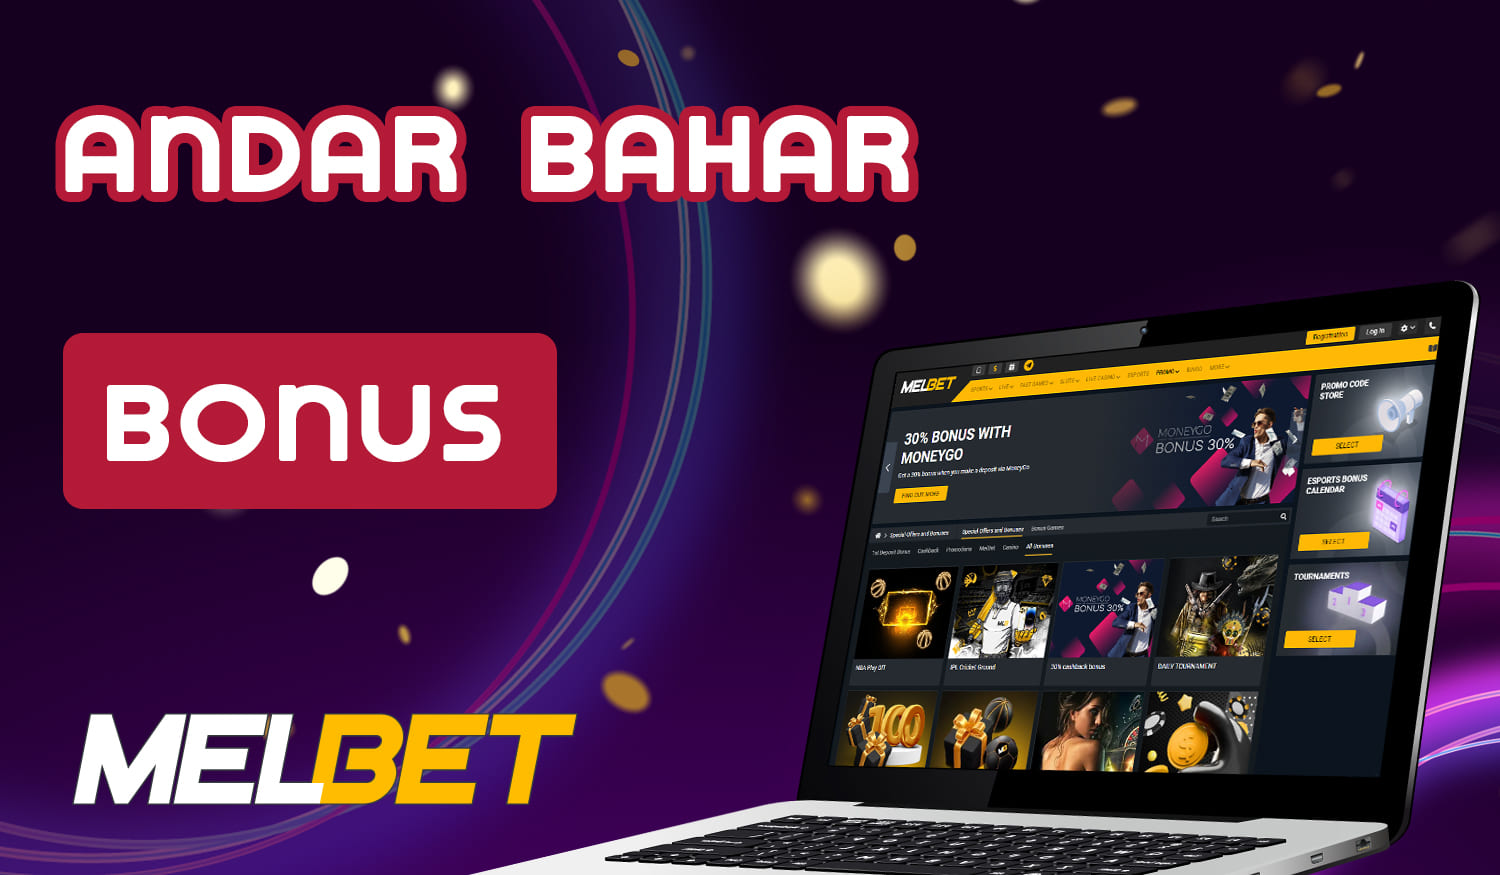 Bonuses available to Andar Bahar fans on Melbet